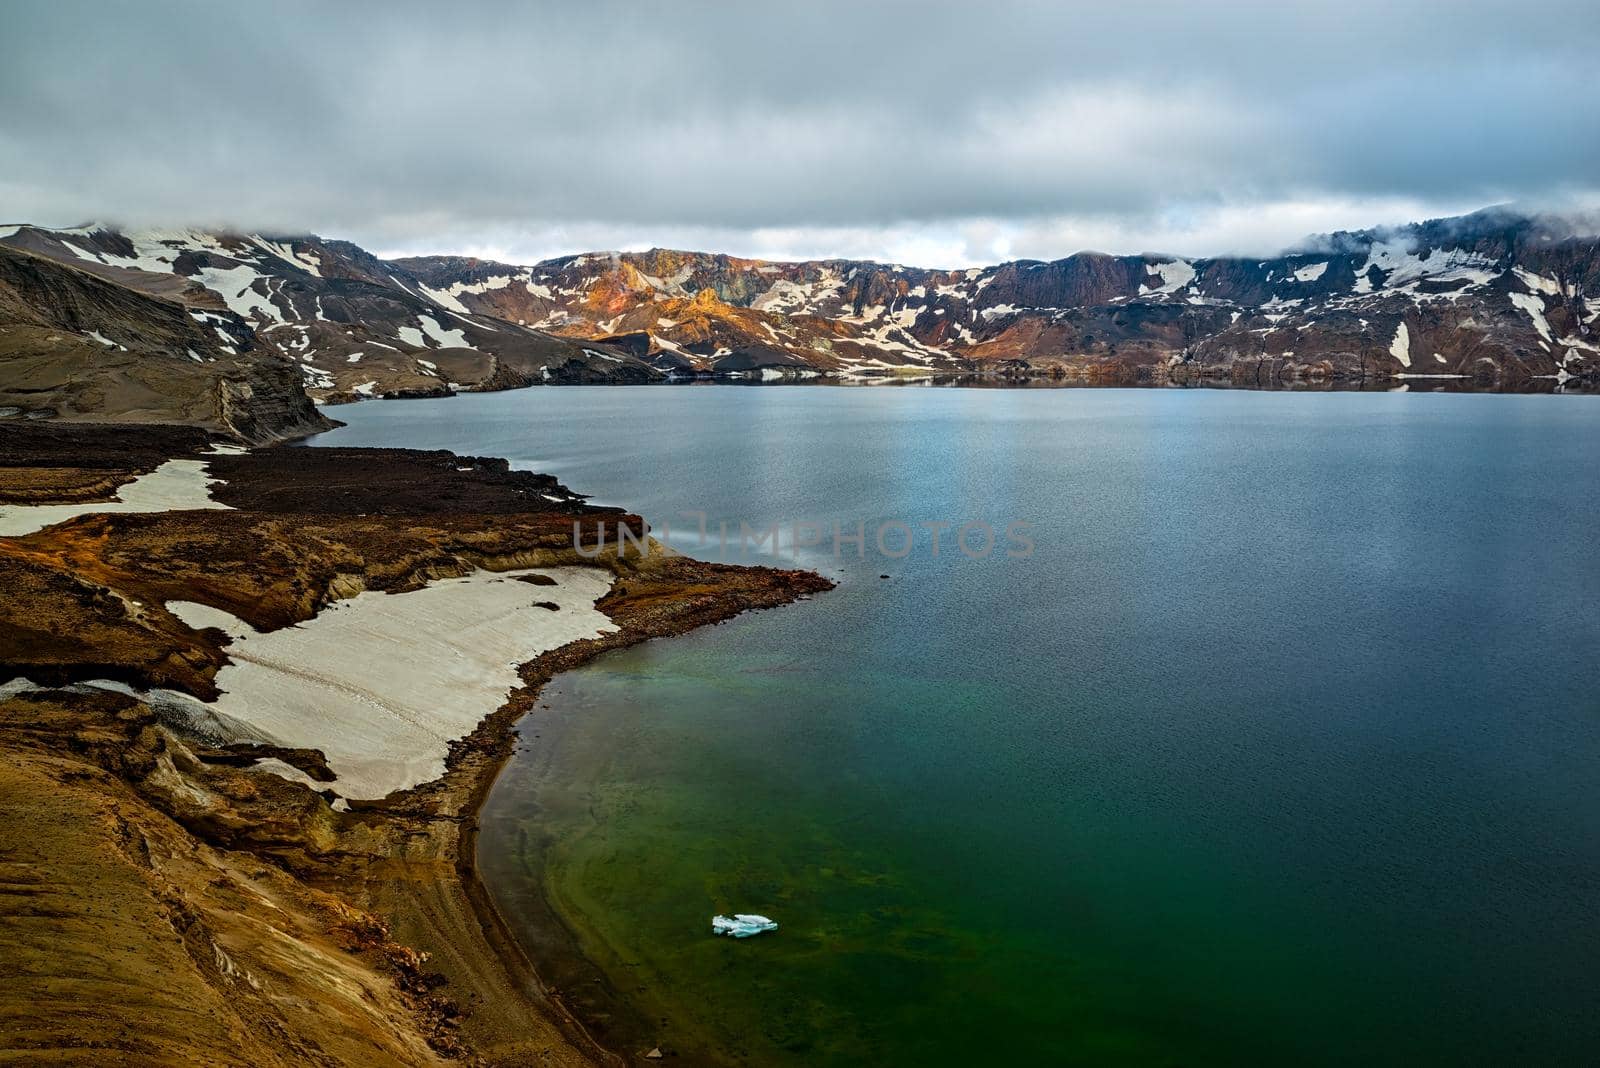 Mount Askja lake, Iceland by LuigiMorbidelli